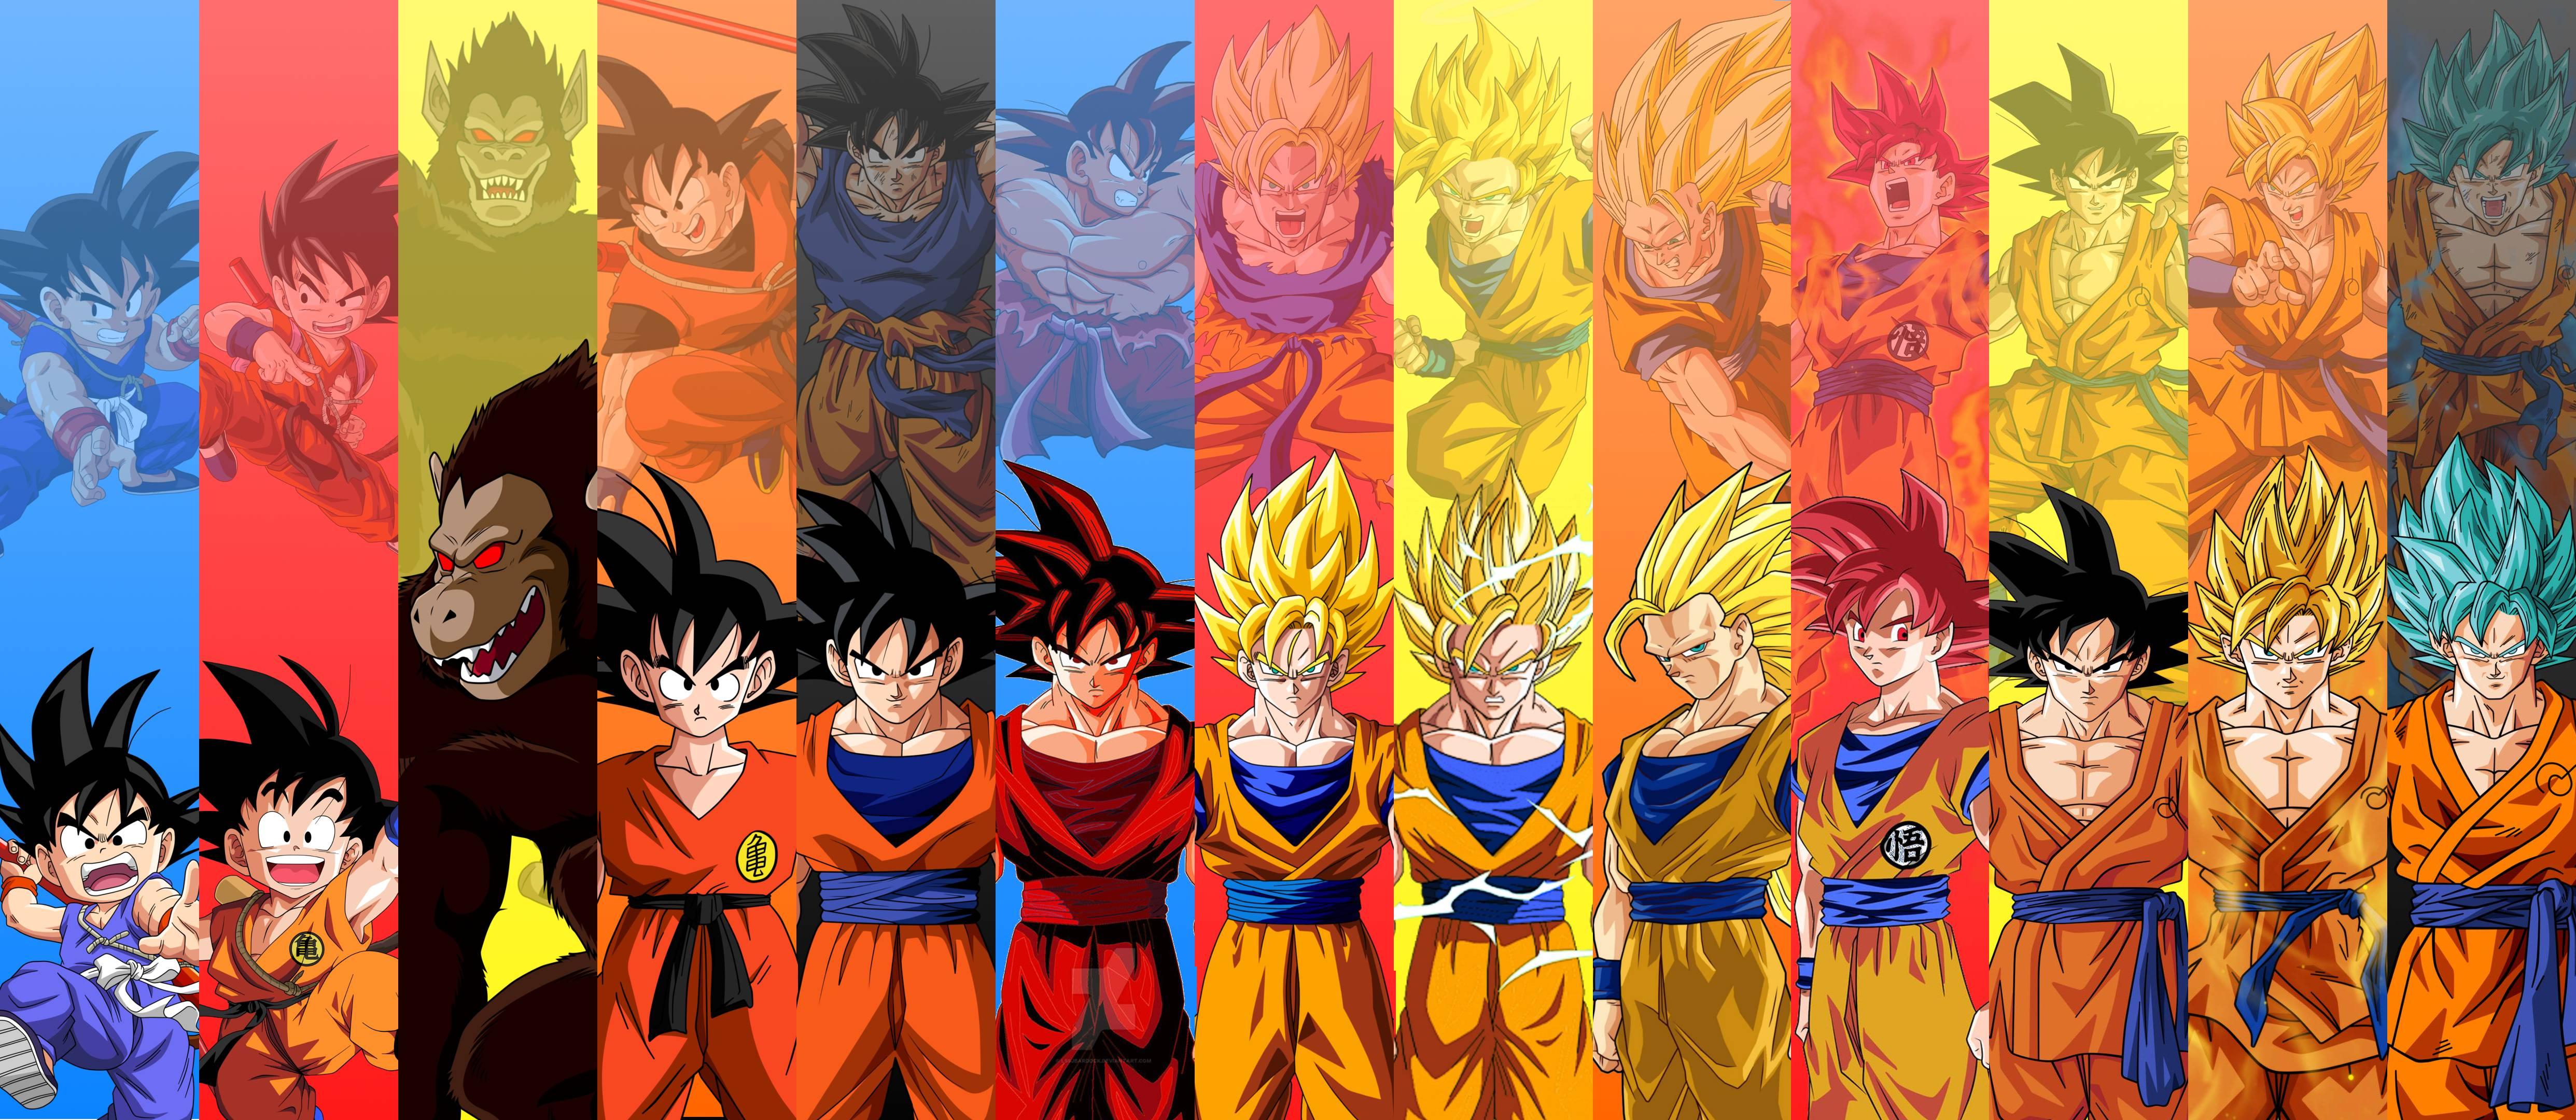 Son Goku Wallpaper. Image Wallpaper. Goku